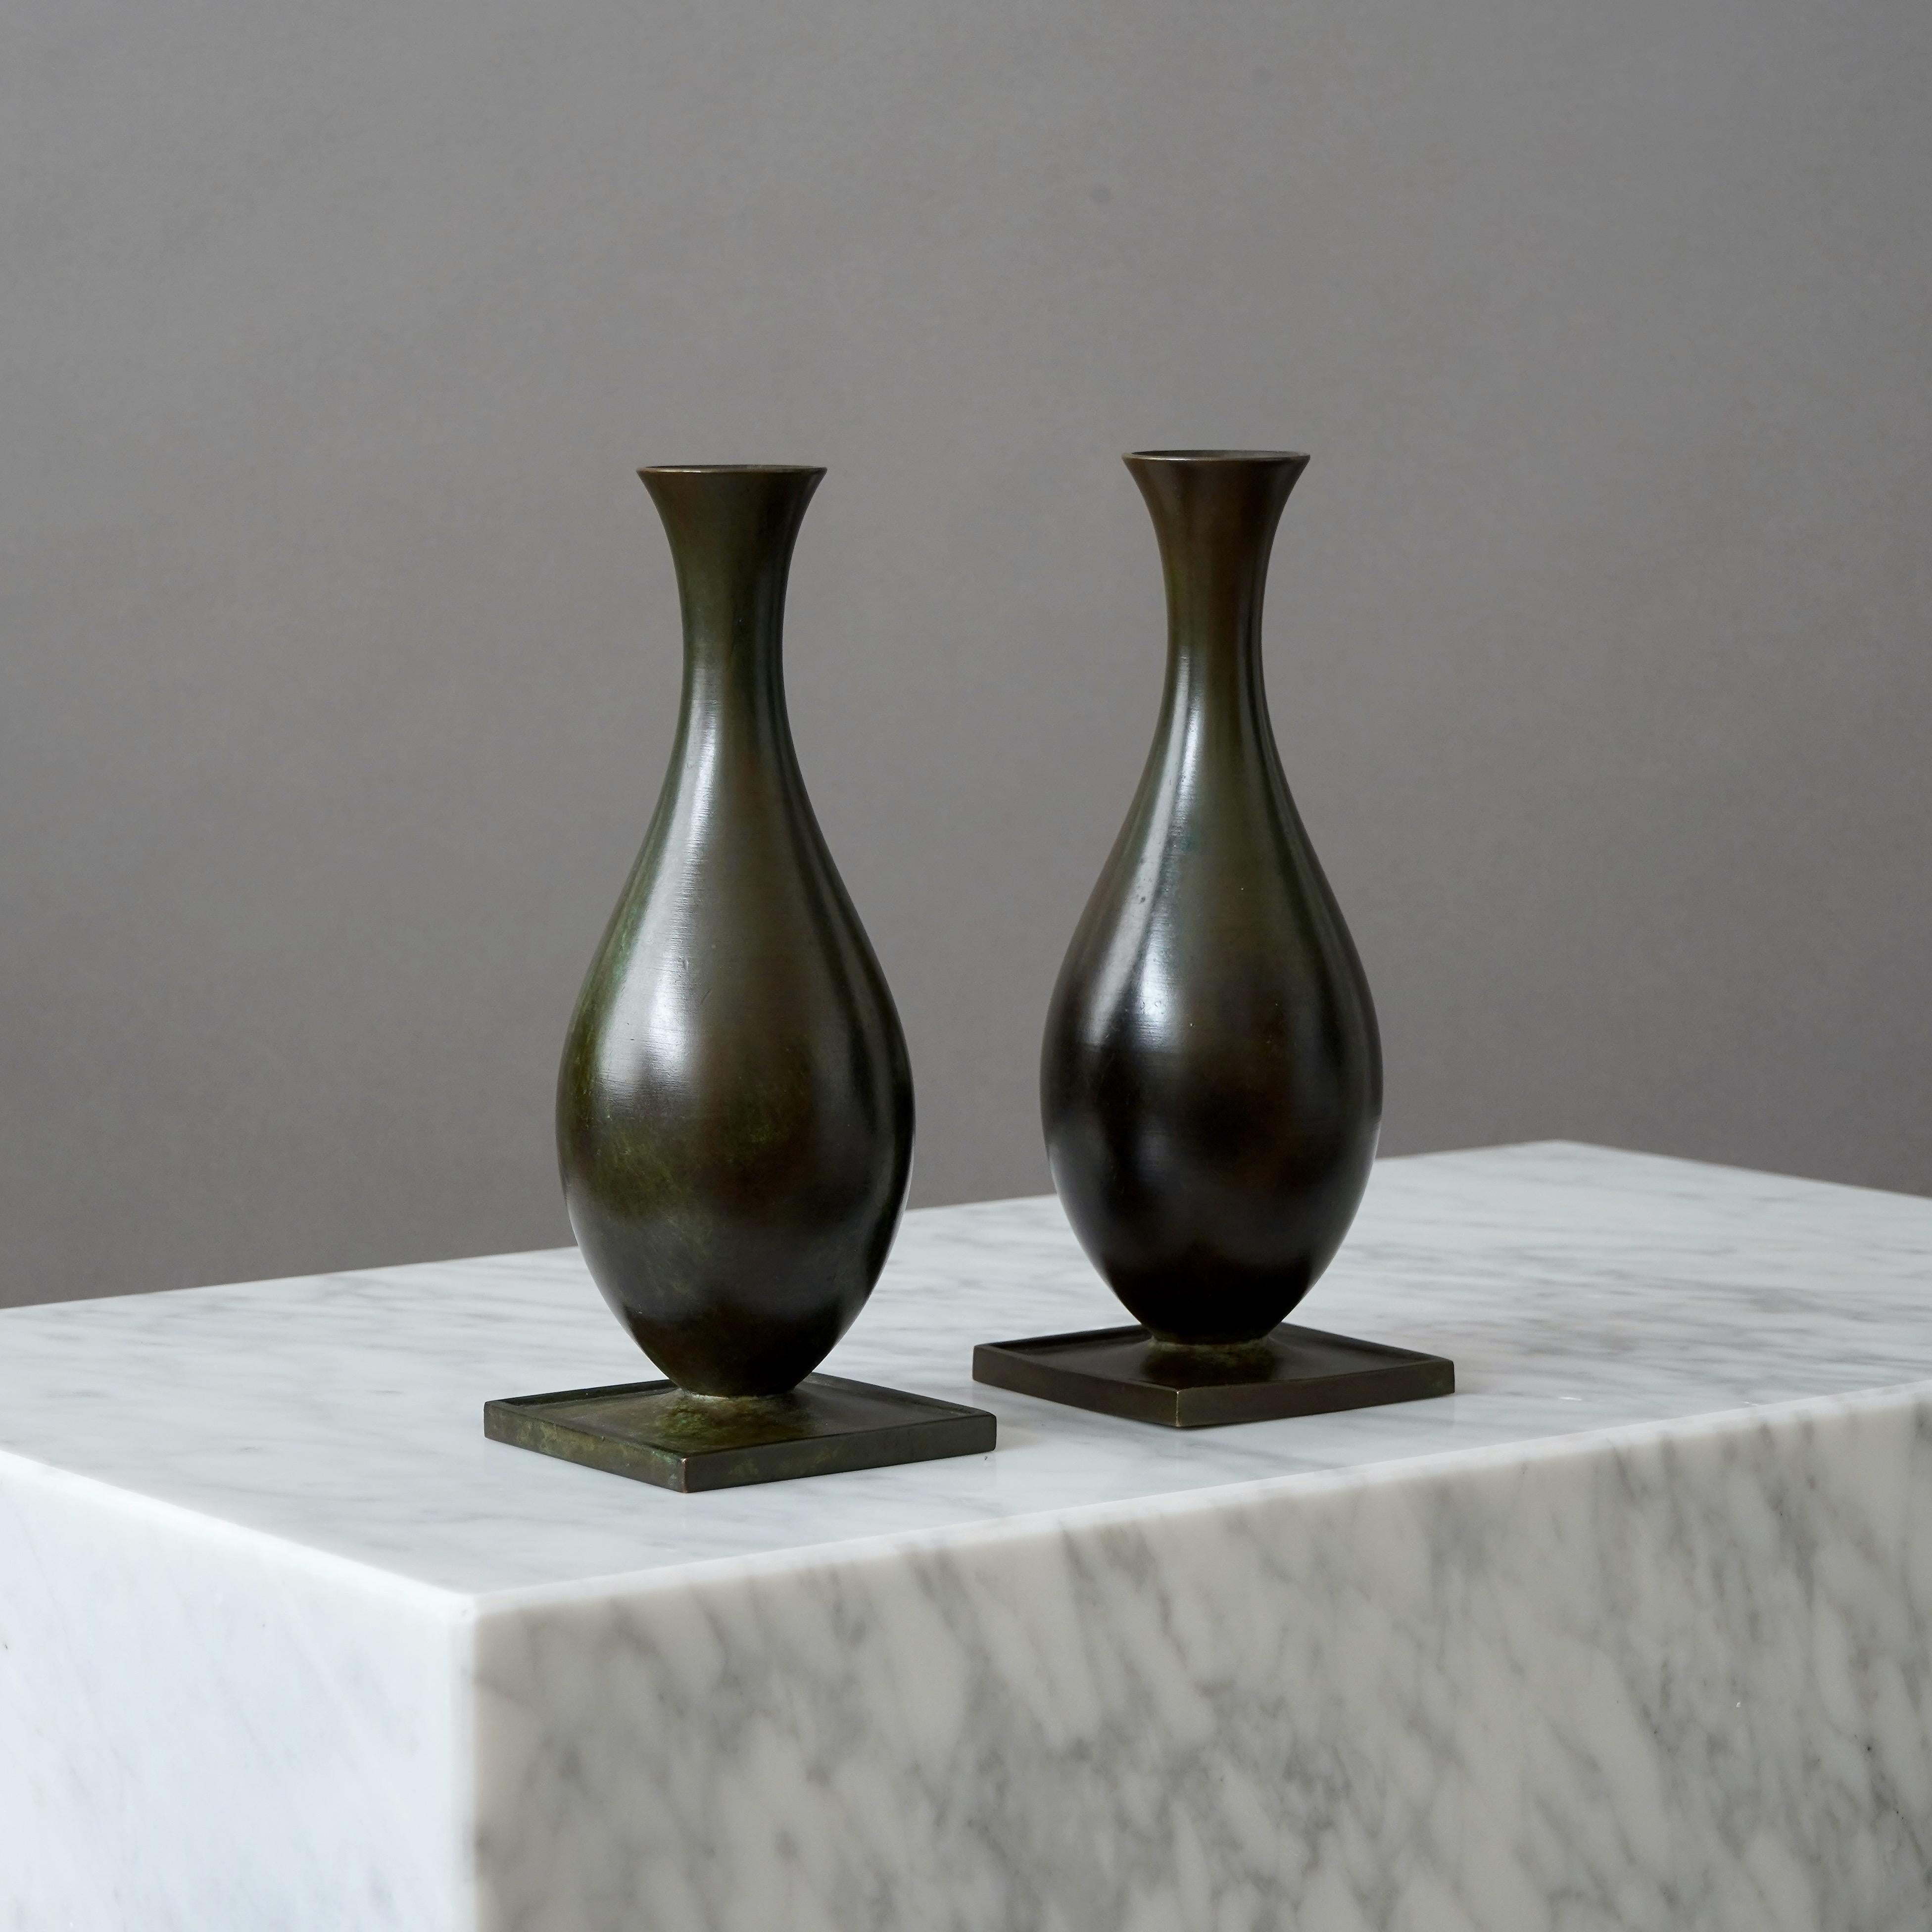 Scandinavian Modern Set of 2 Bronze Art Deco Vases by GAB Guldsmedsaktiebolaget, Sweden, 1930s For Sale